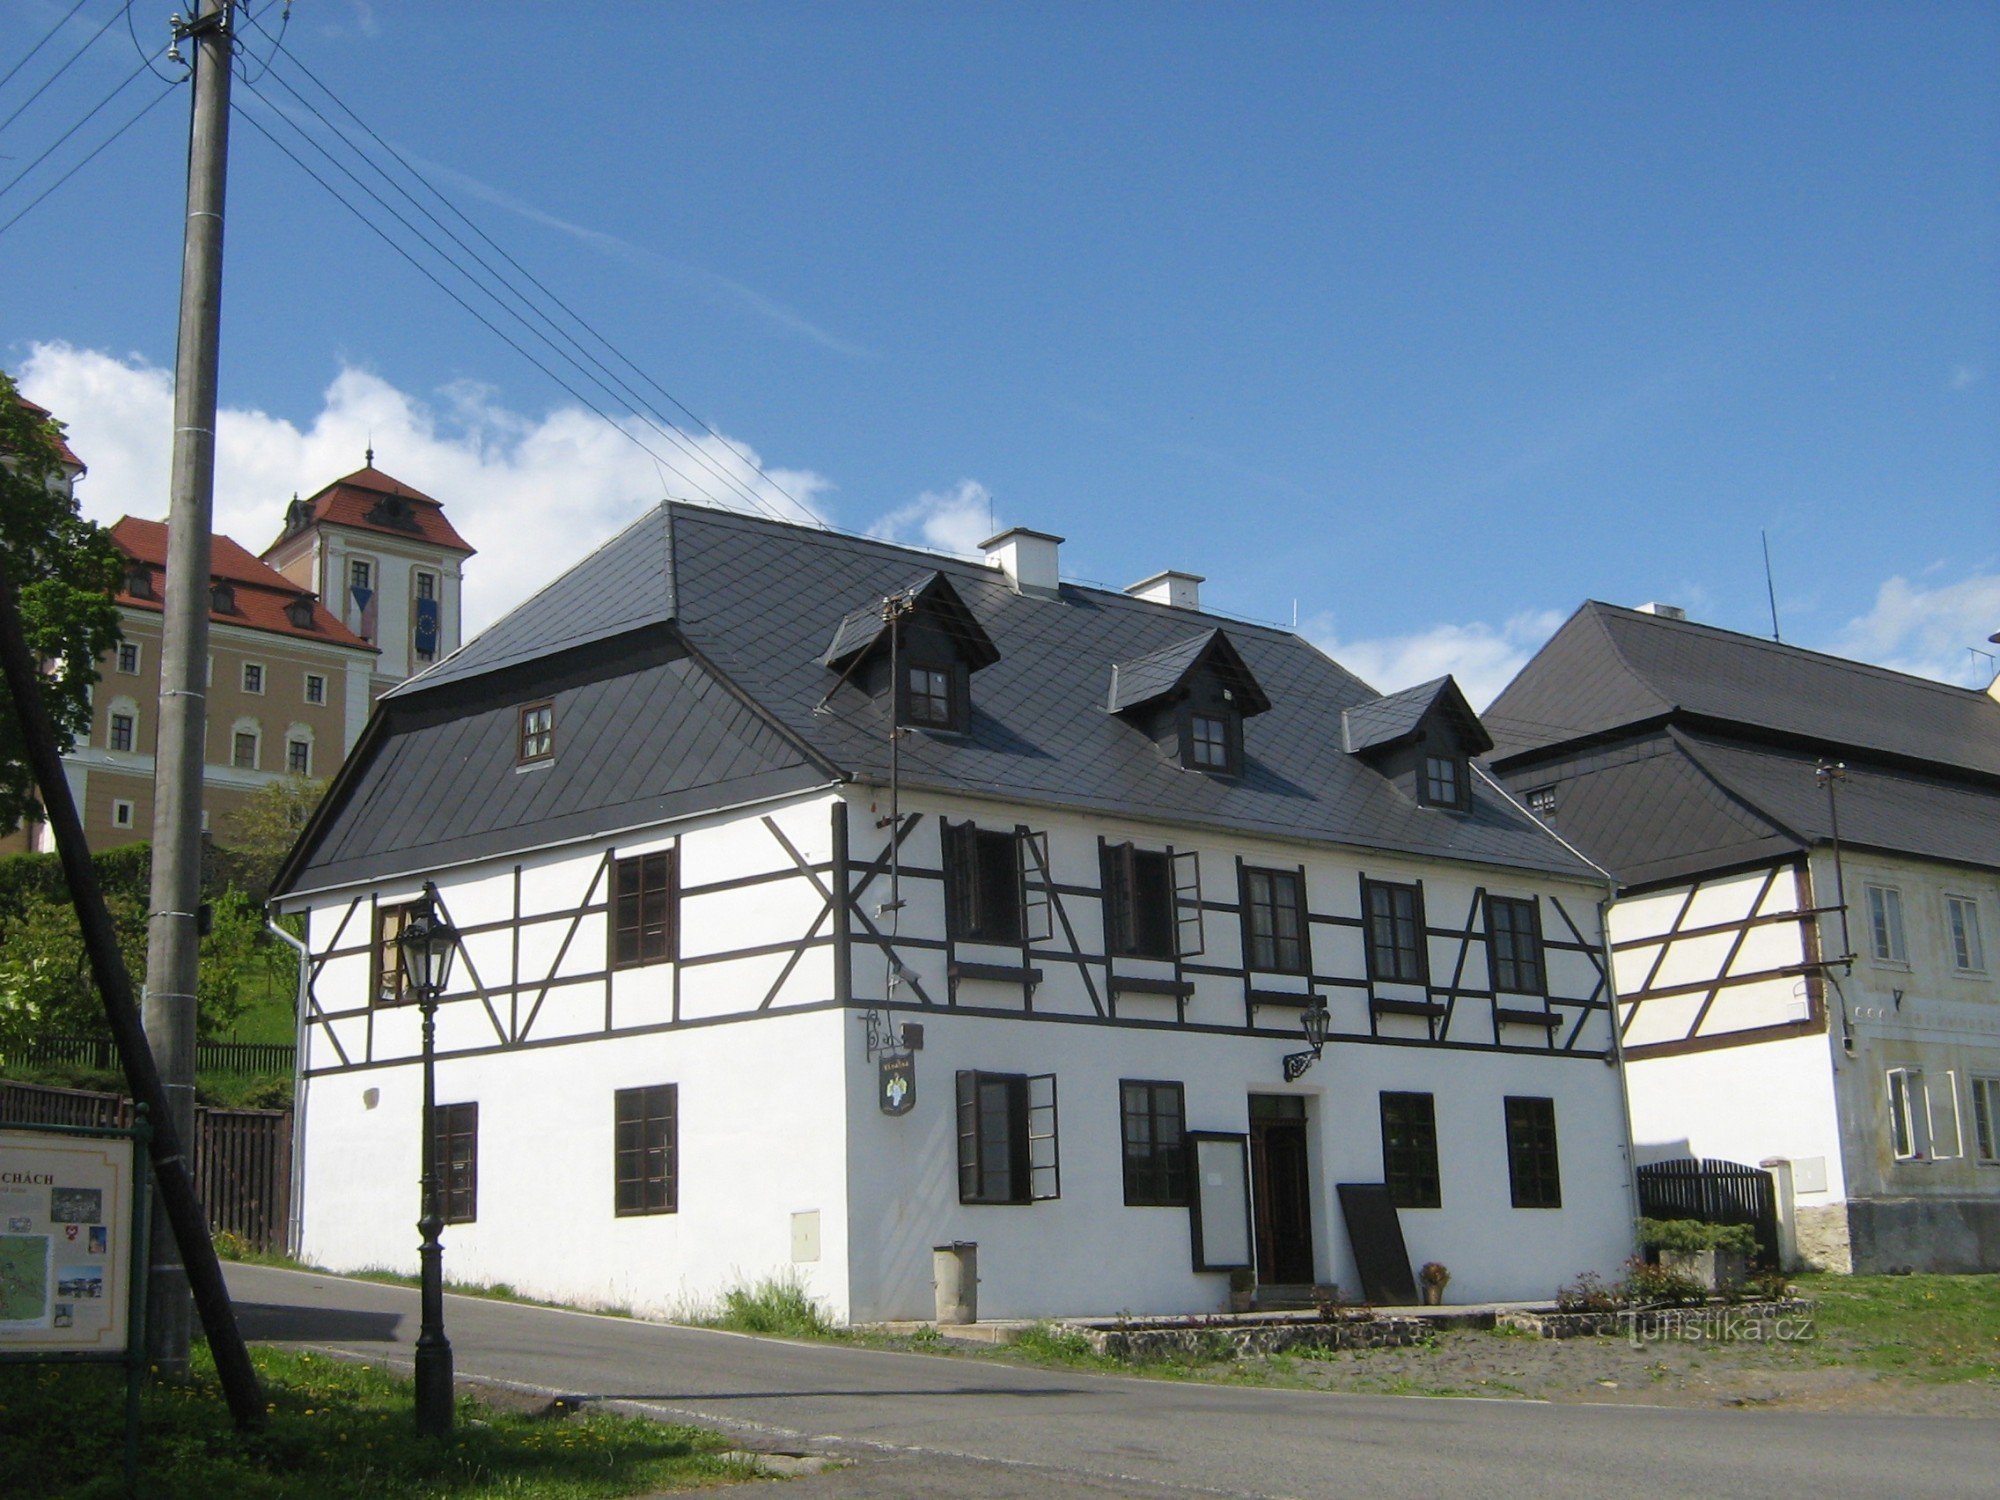 Valeč - arquitectura popular